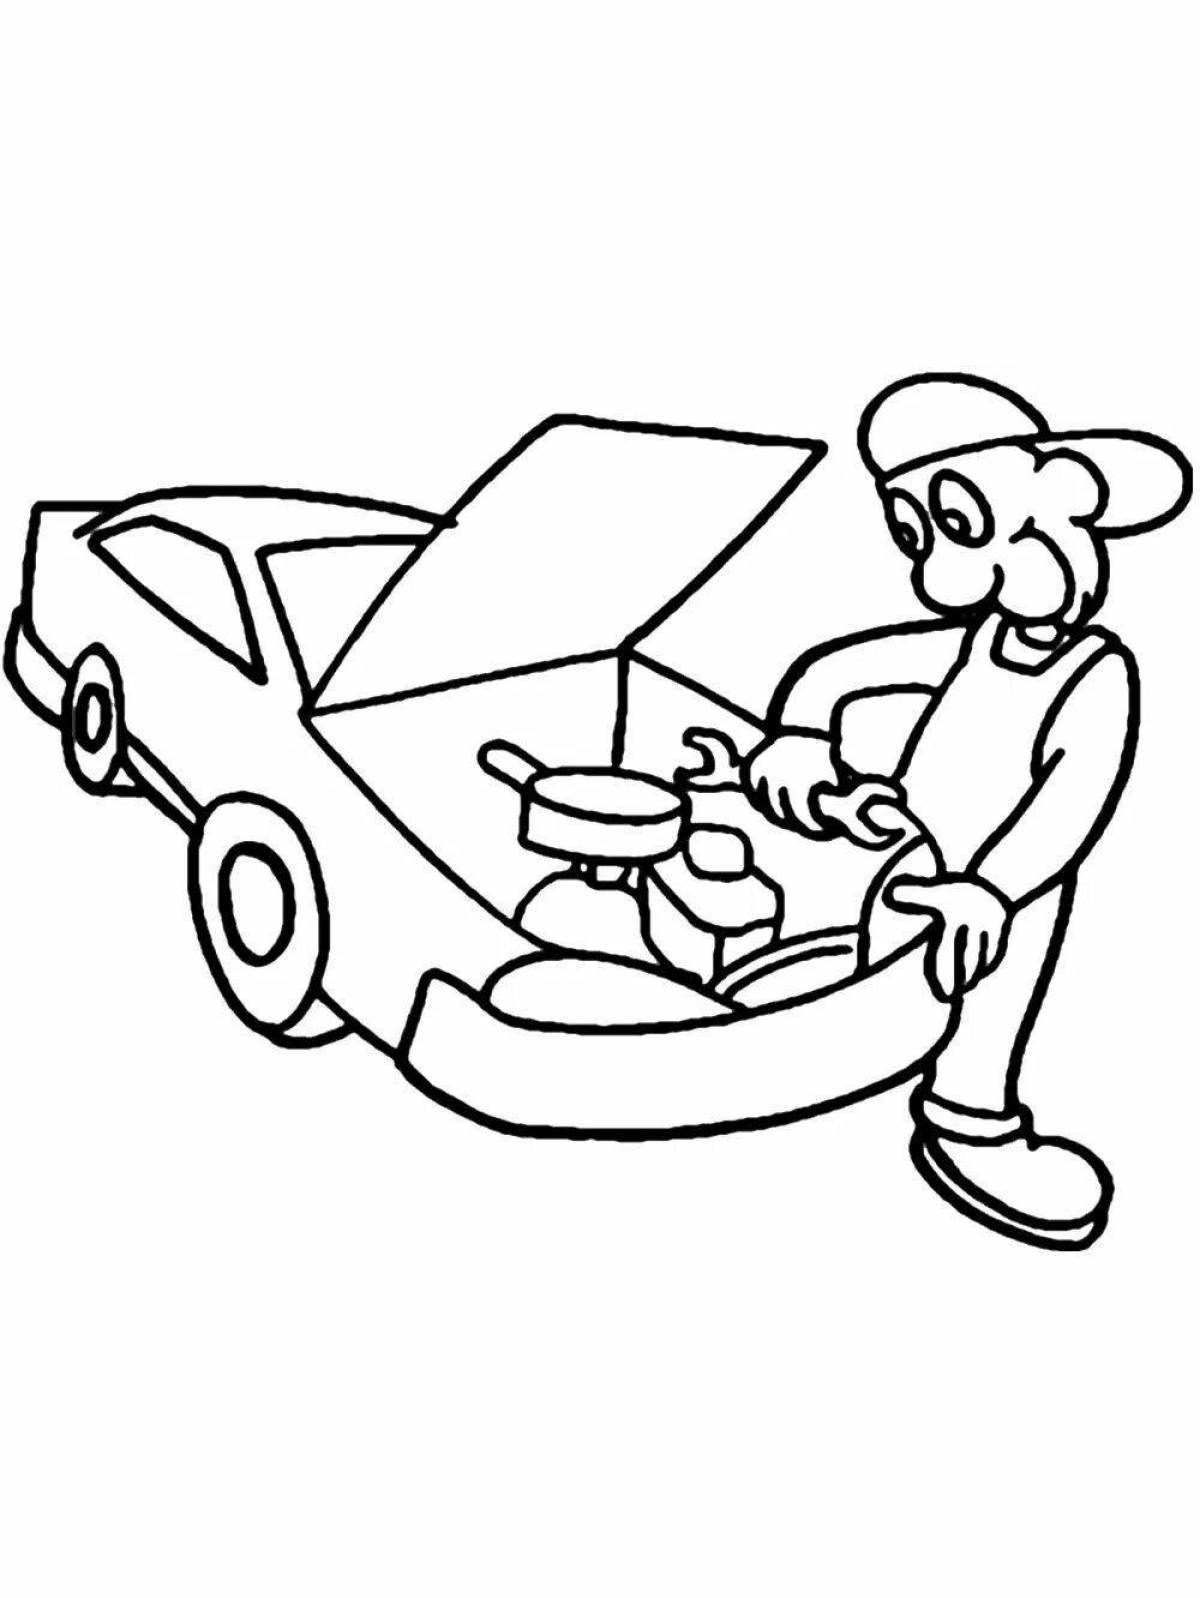 Inspiring car mechanic coloring book for kids